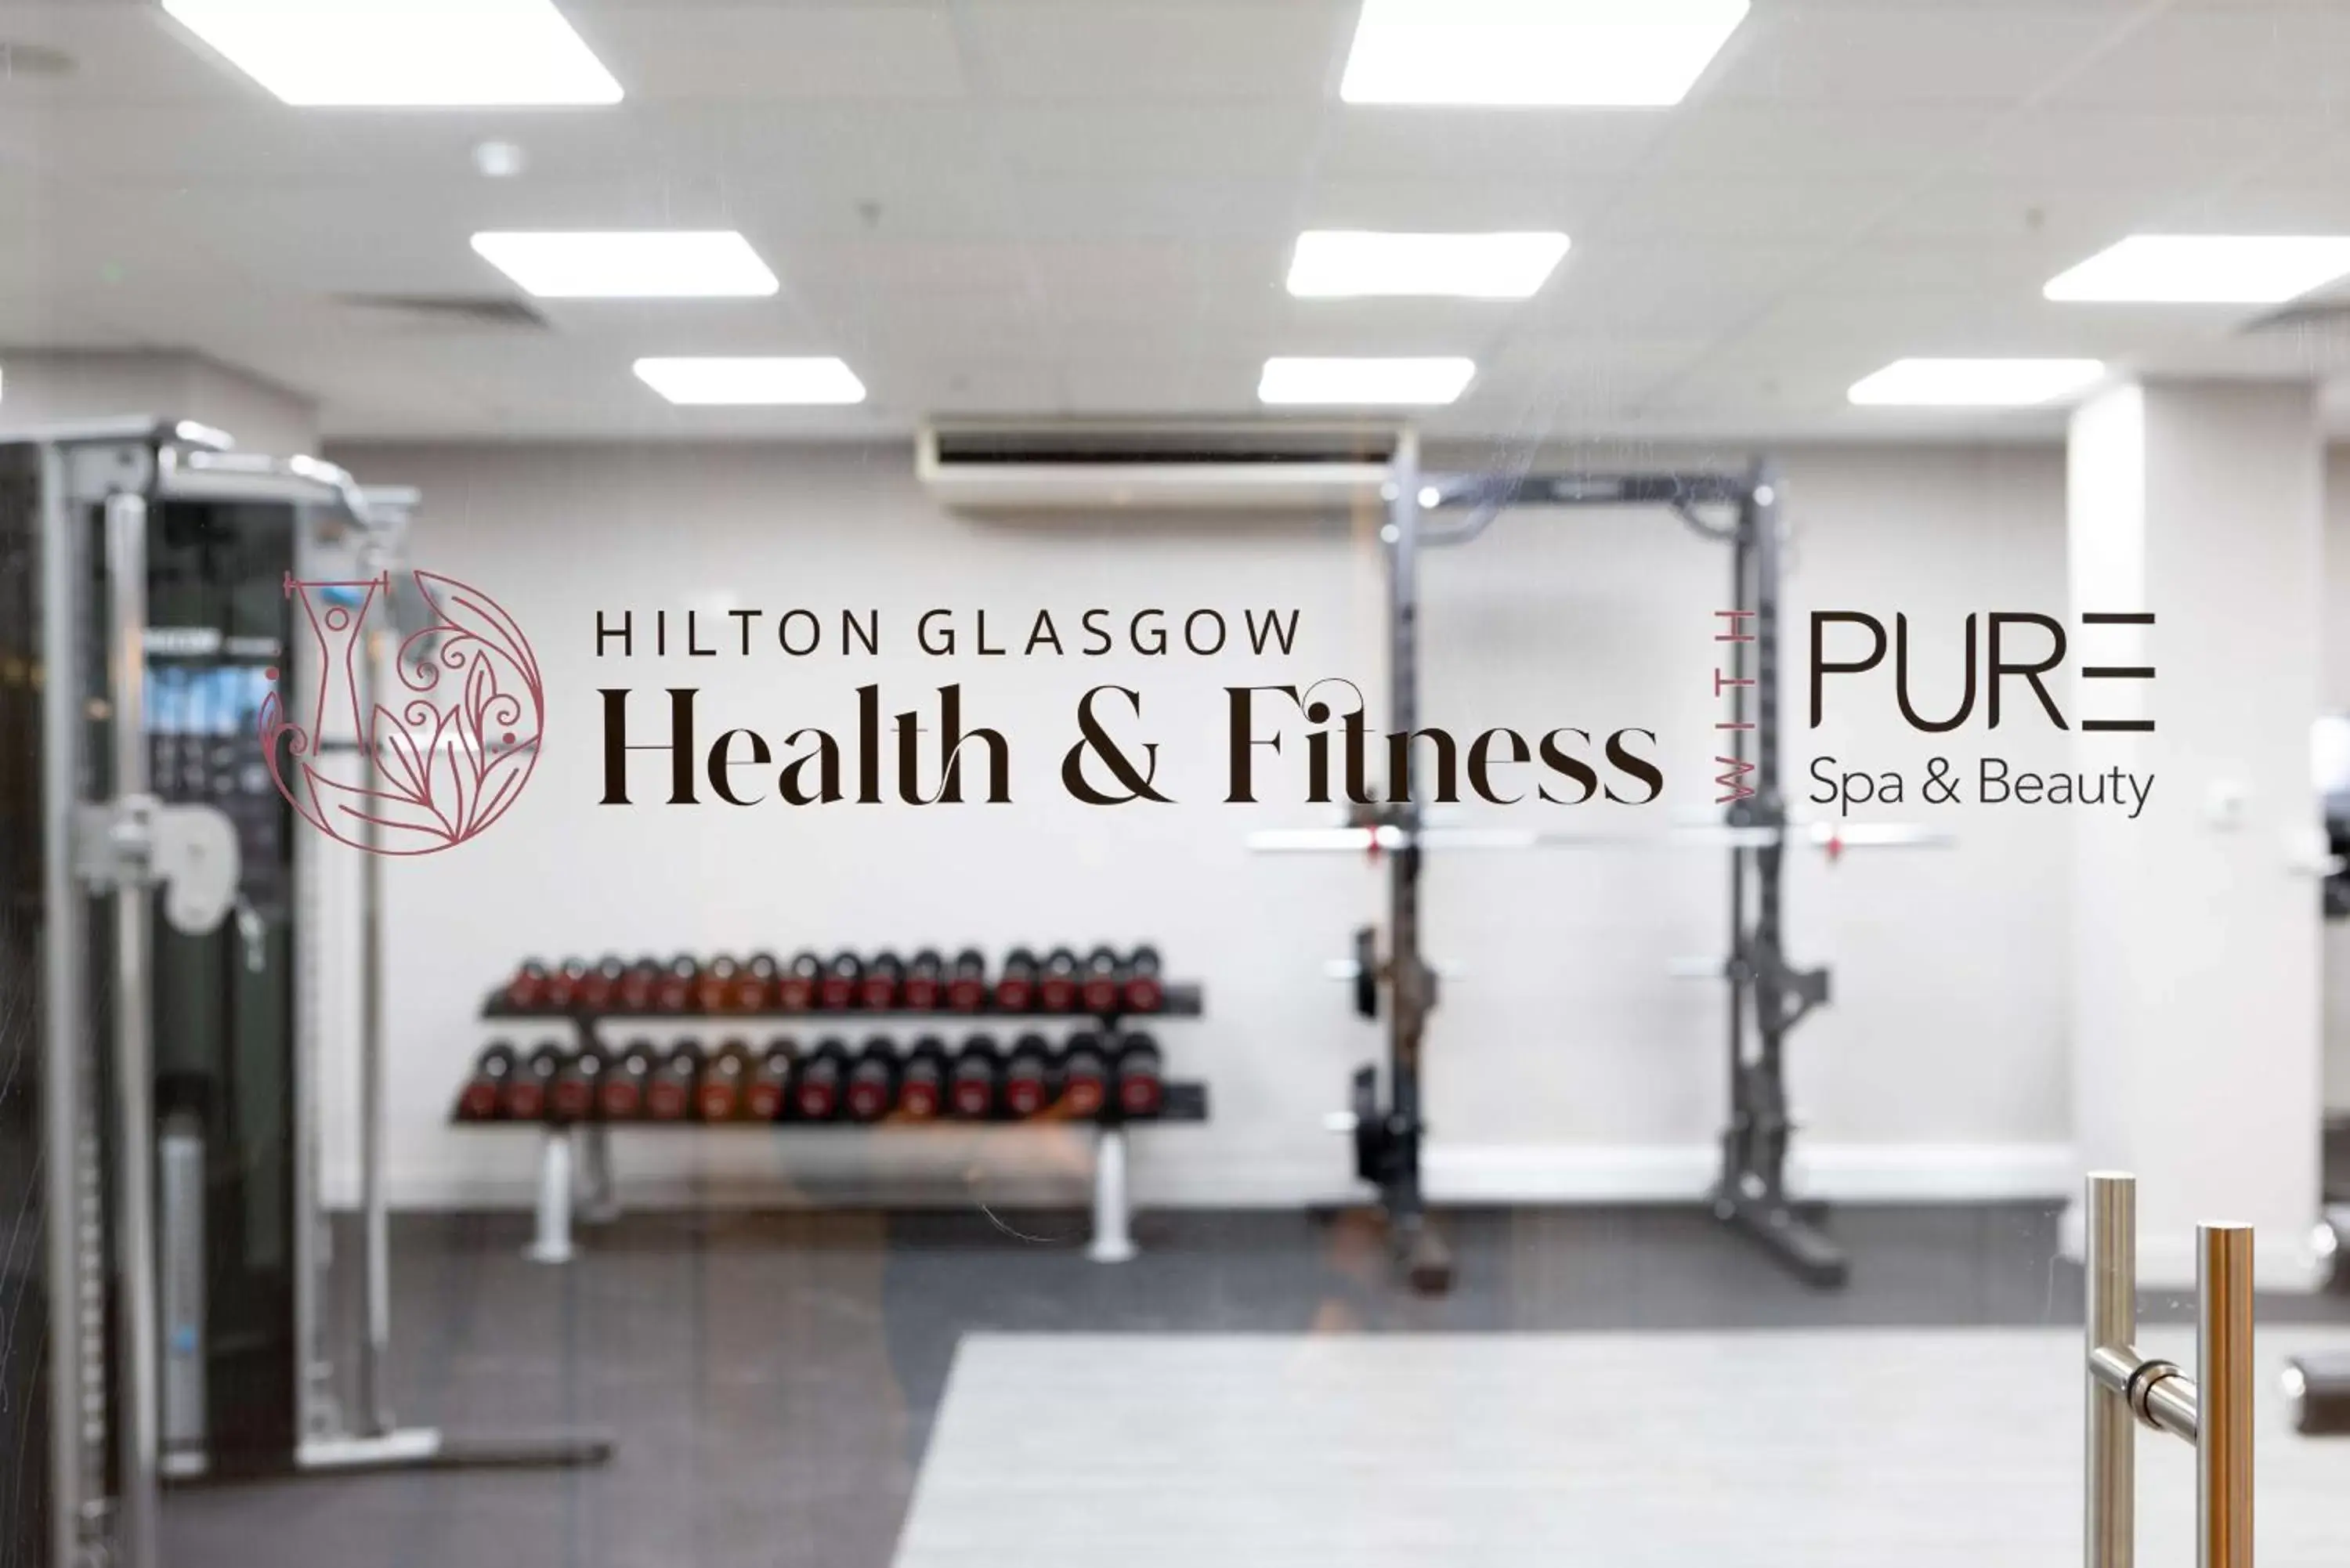 Fitness centre/facilities, Fitness Center/Facilities in Hilton Glasgow